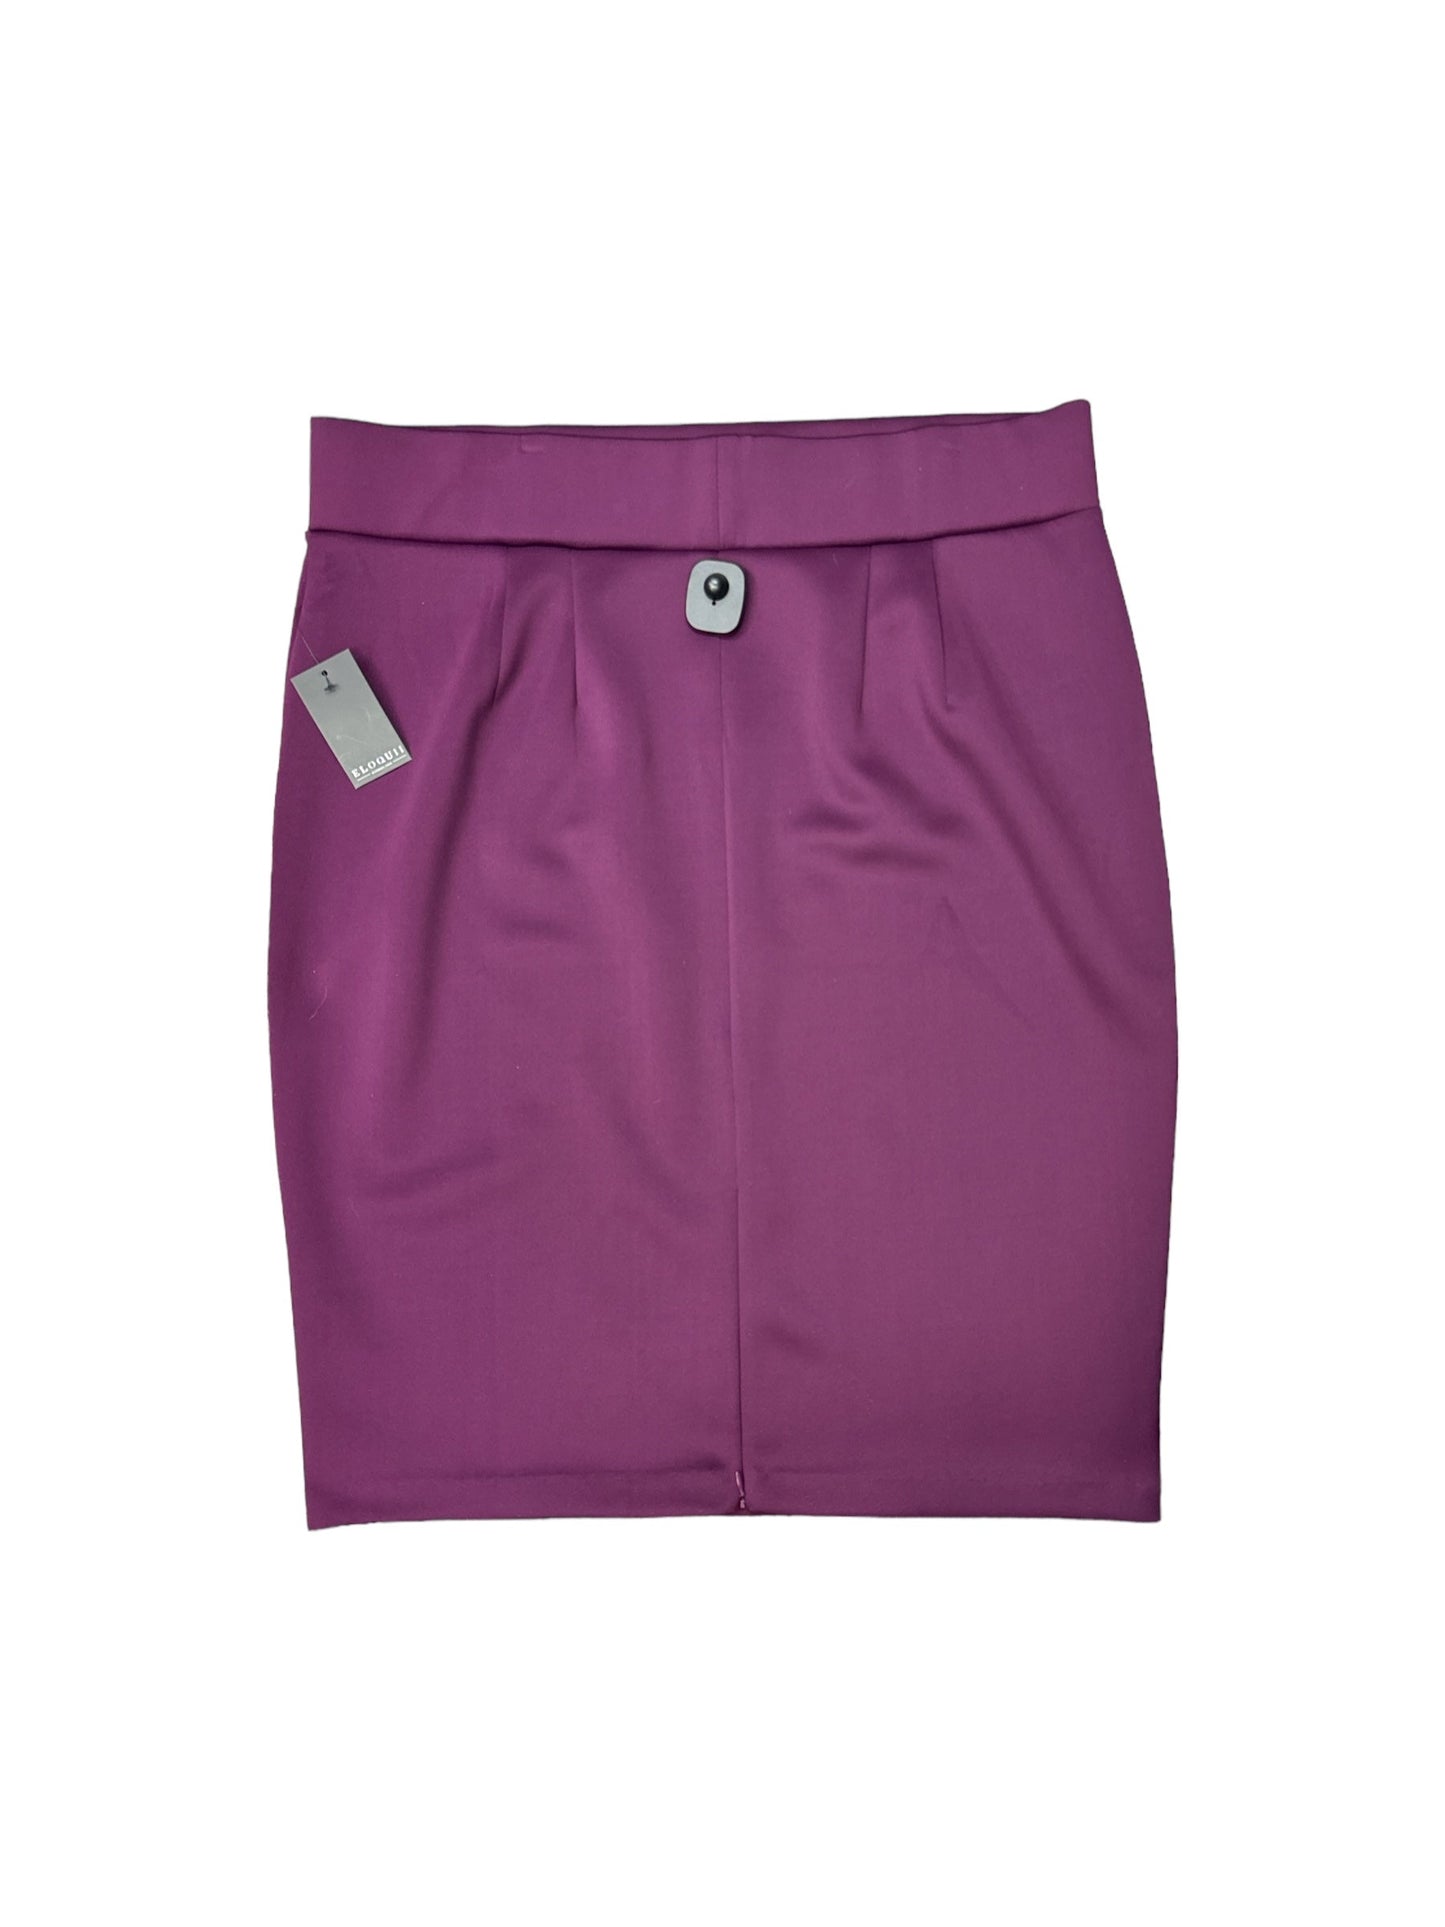 Purple Skirt Midi Eloquii, Size 22